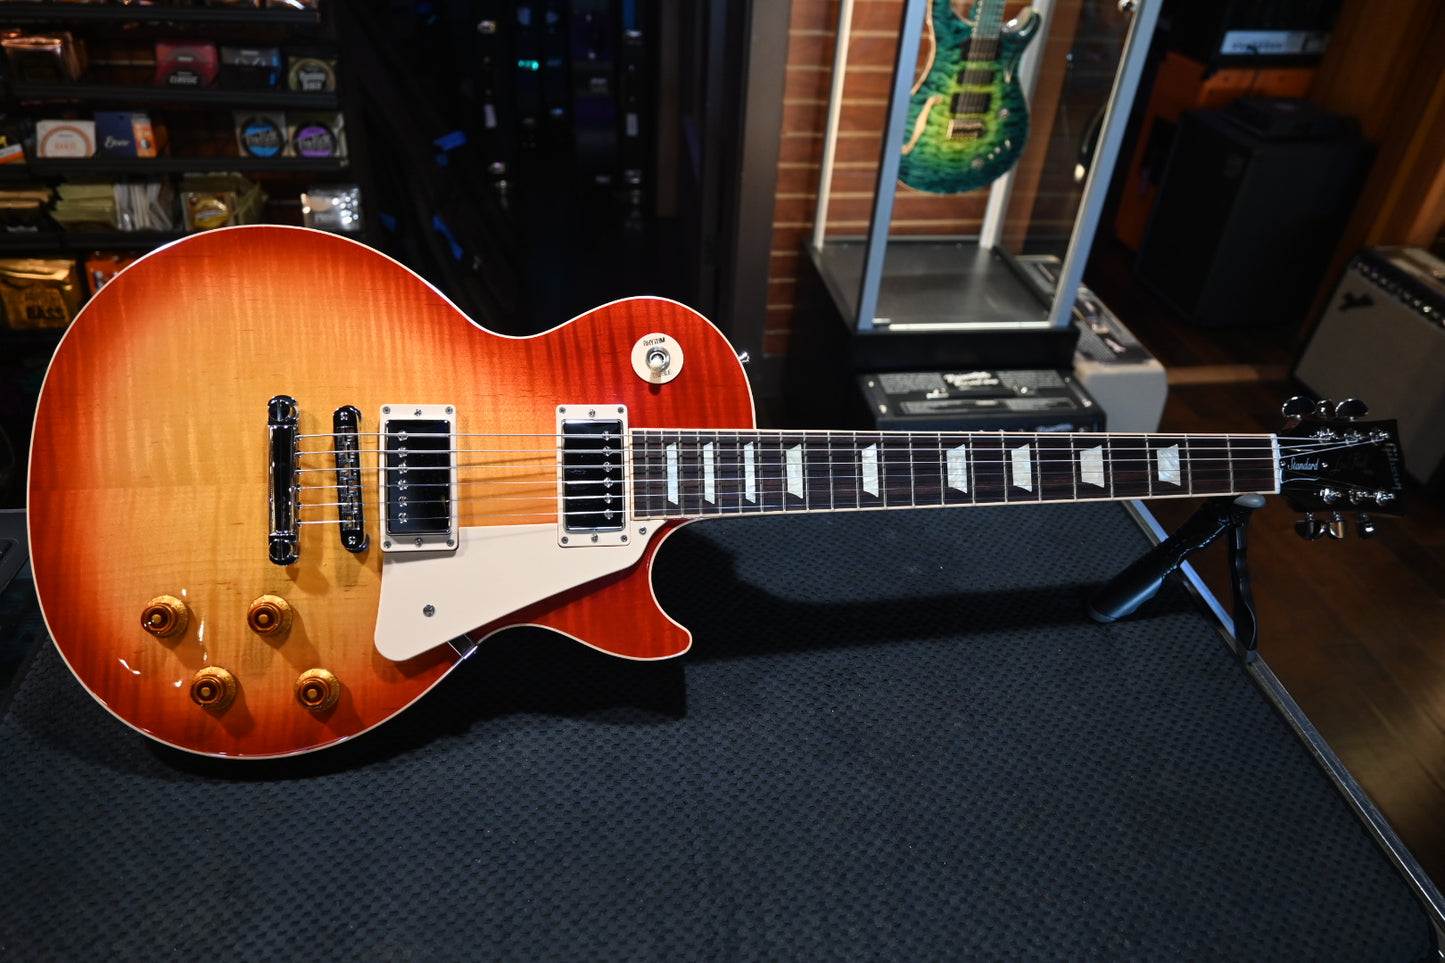 Gibson Les Paul Standard 2013 - Cherry Burst Guitar #0642 - Danville Music